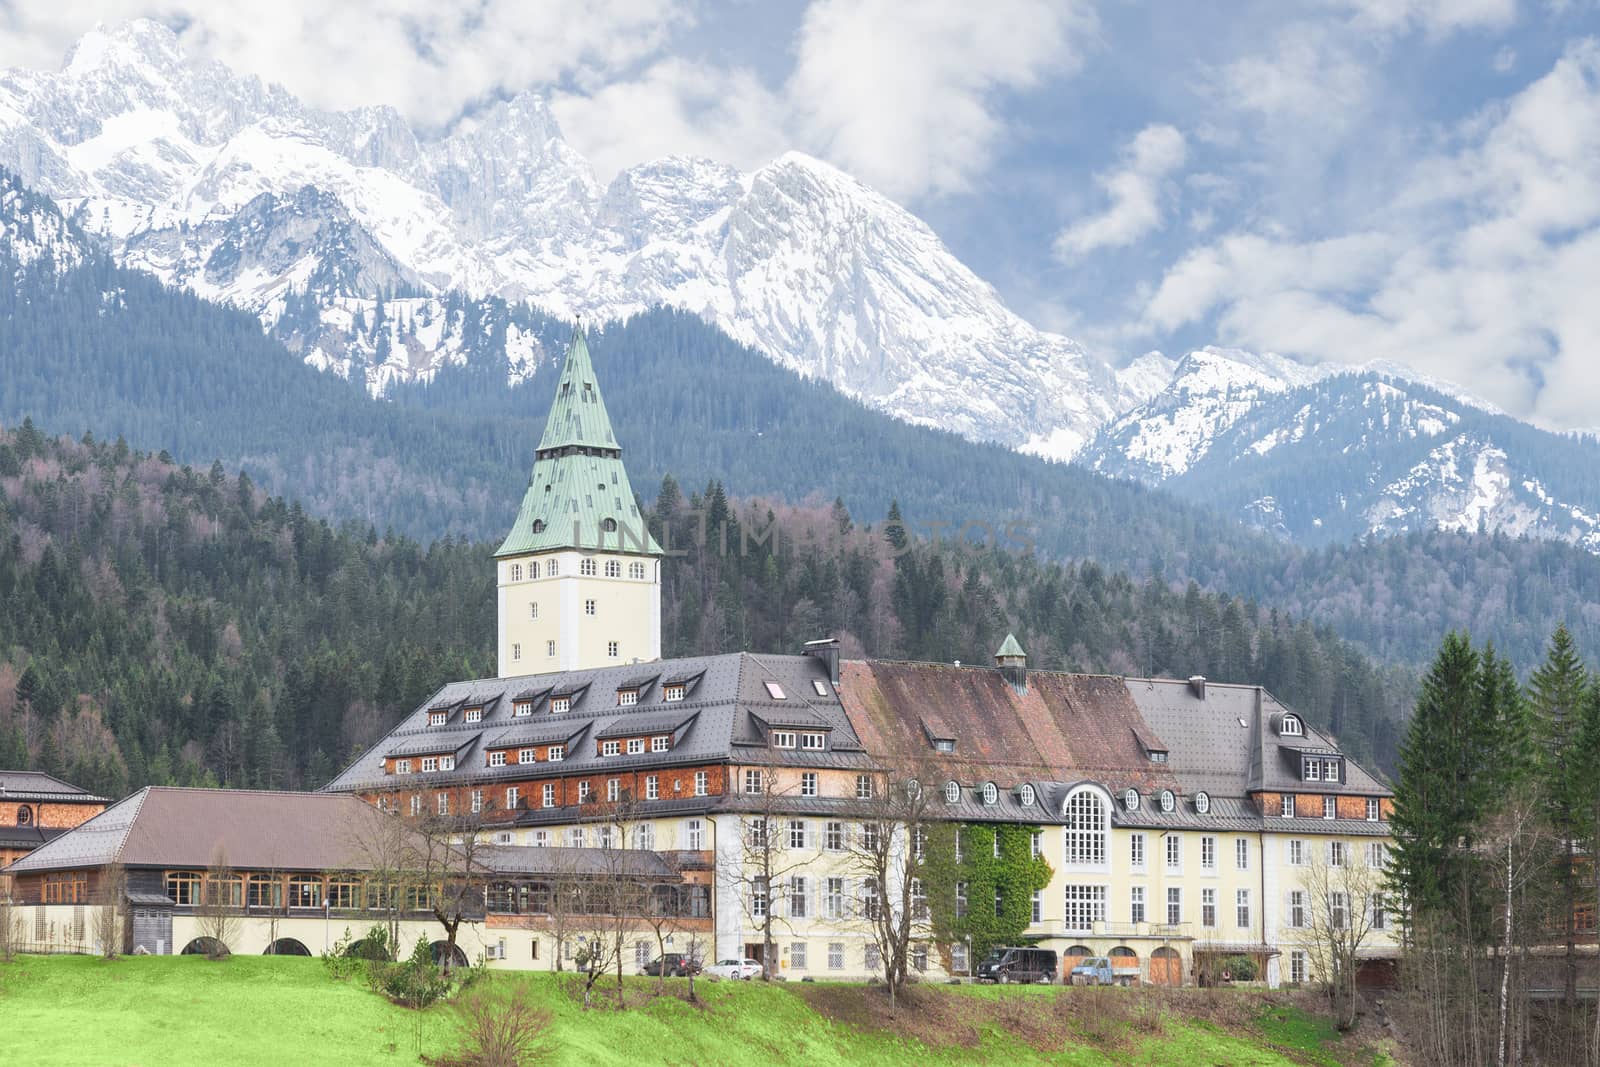 Bavarian hotel Schloss Elmau is official venue of G8 summit by servickuz